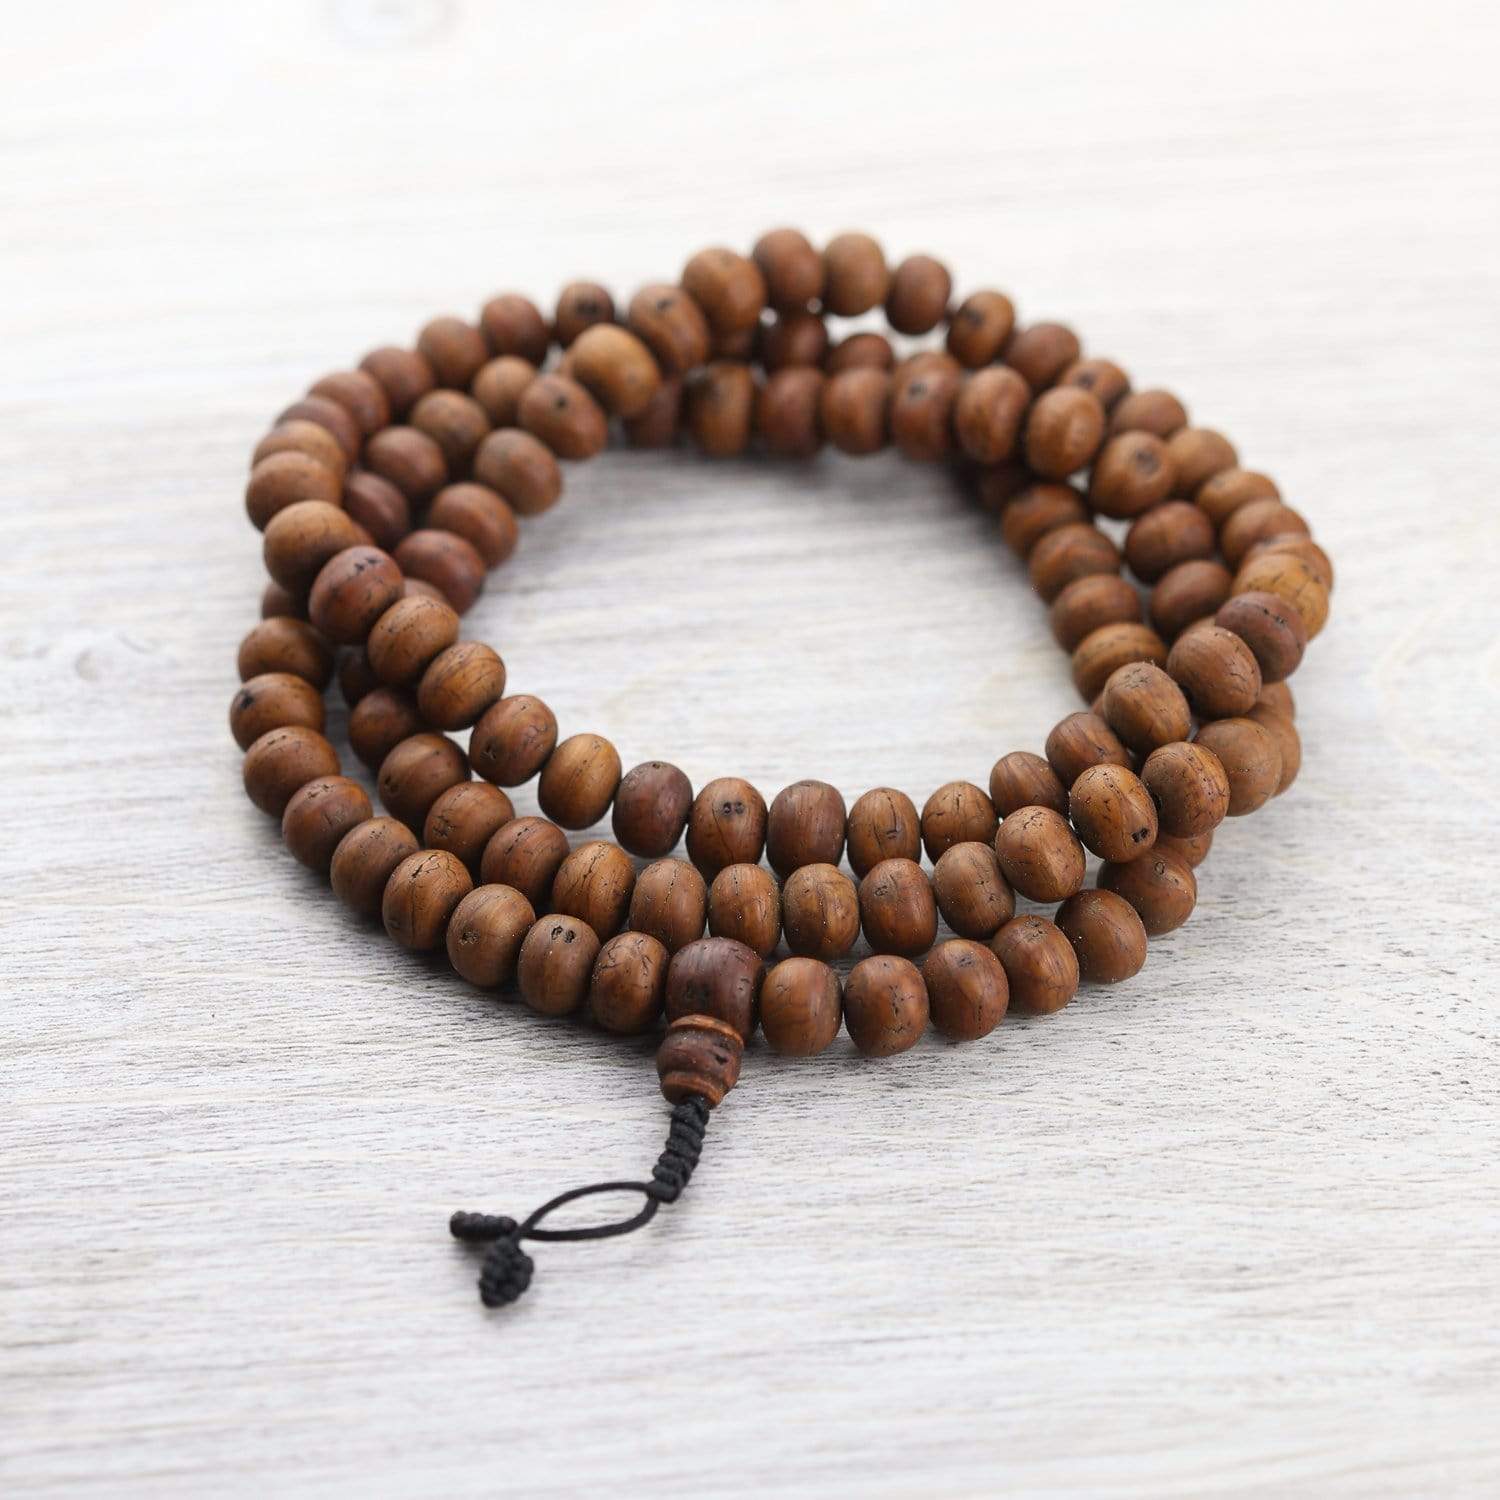 Wood & Natural Beads - DharmaShop